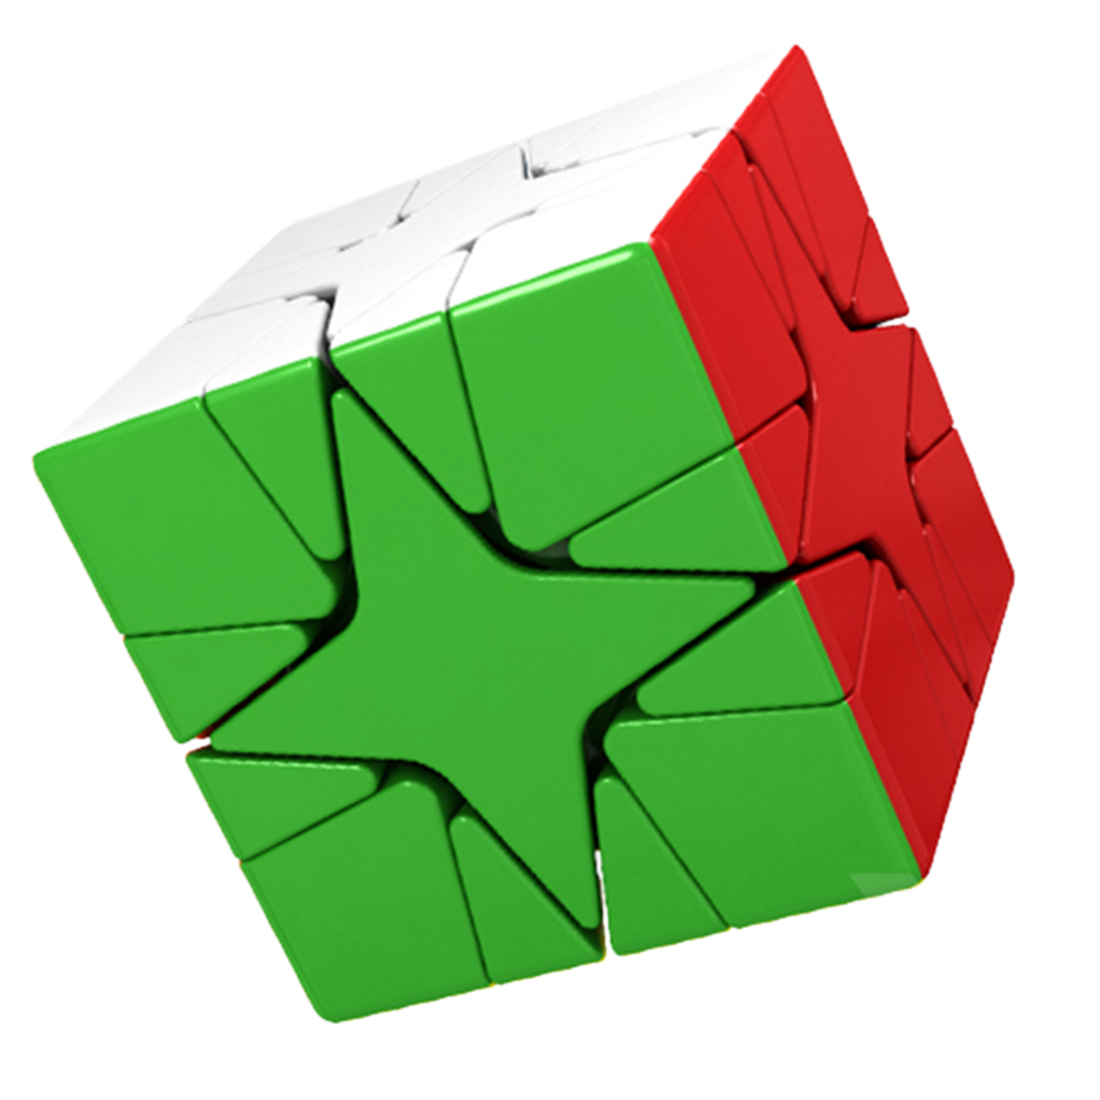 MFJS Polaris Cube